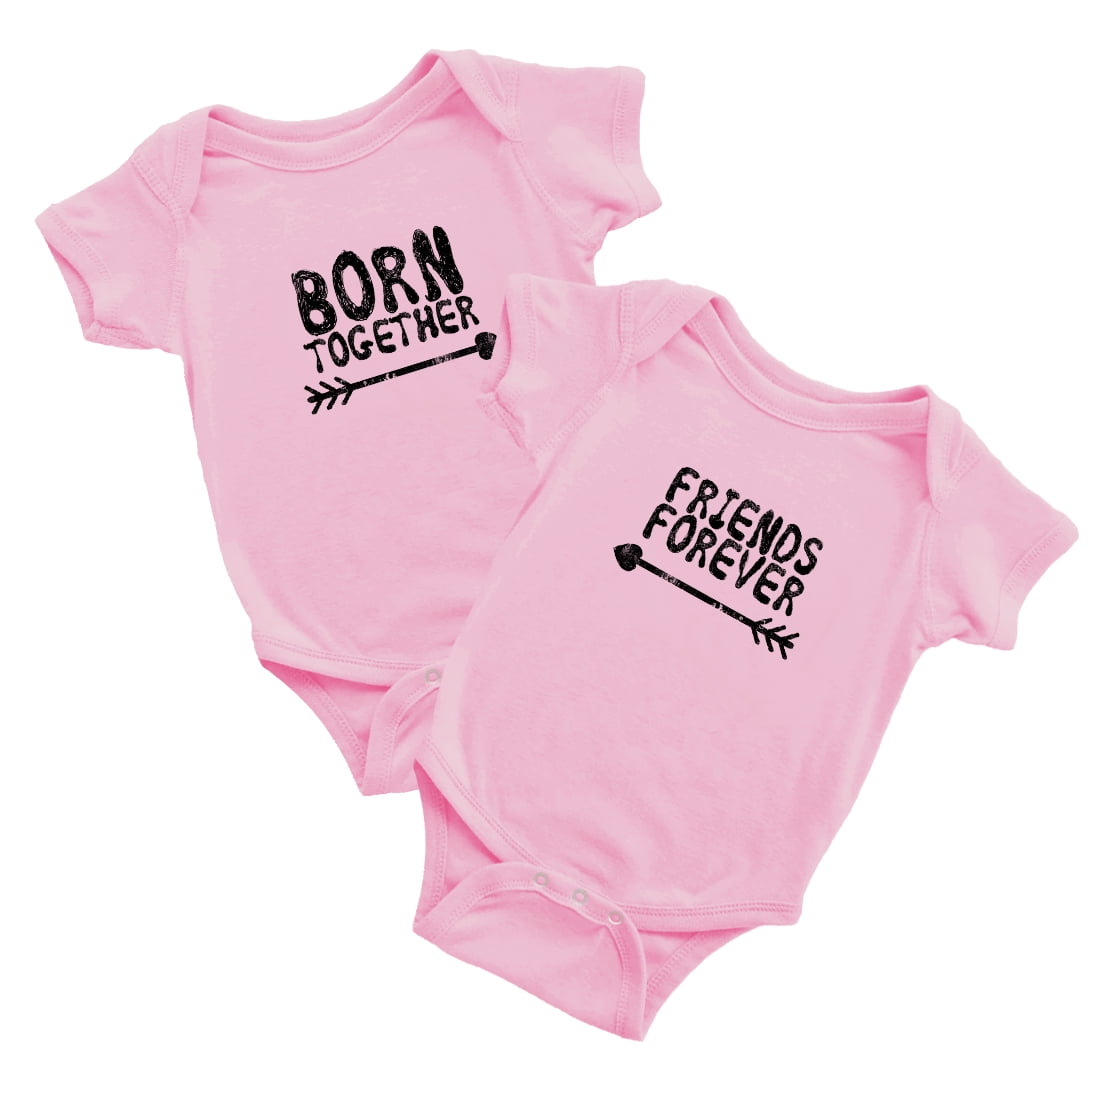 TWIN unisex babygrows, bodysuit, baby clothing vest, baby gift baby shower